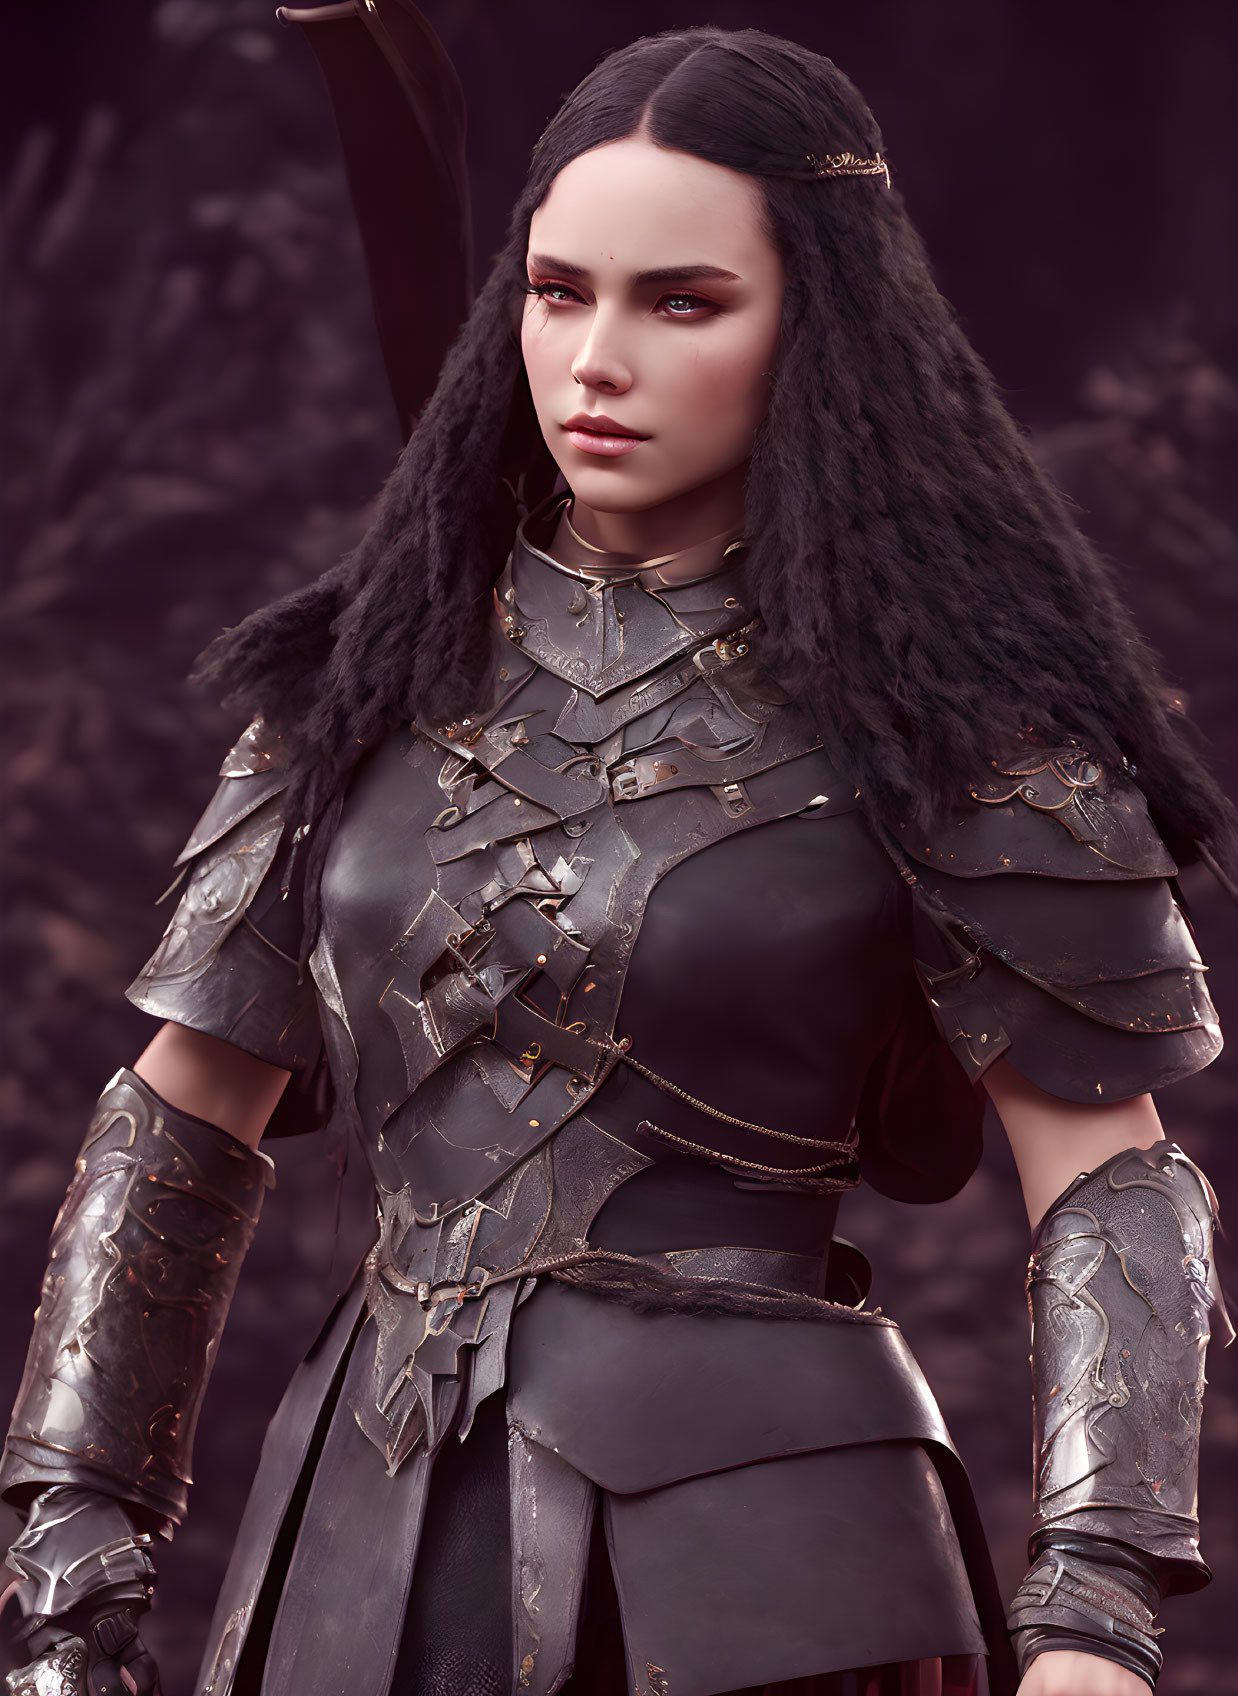 Warrior woman in dark armor with intense gaze in mystical forest